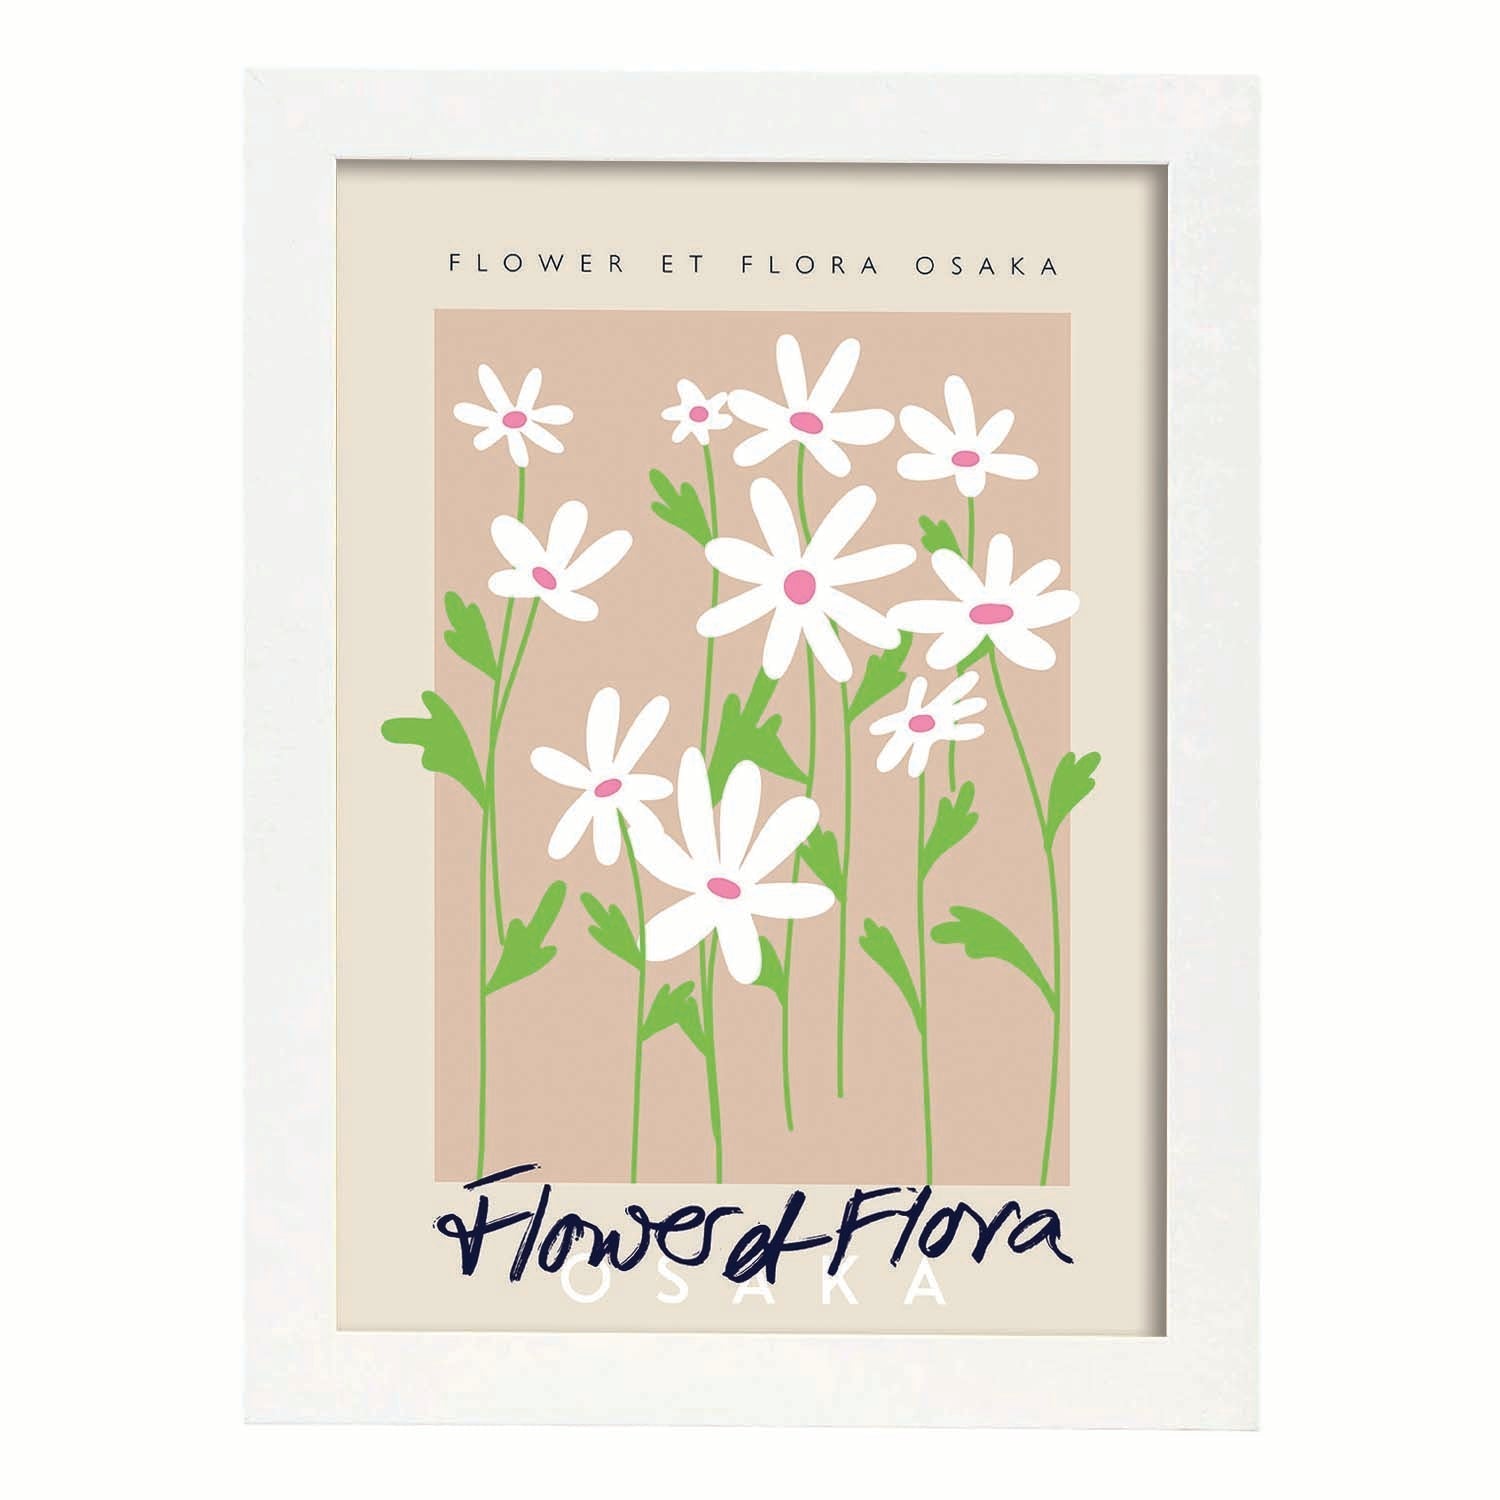 Lamina artistica decorativa con ilustración de Flower et flora osaka-Artwork-Nacnic-A4-Marco Blanco-Nacnic Estudio SL